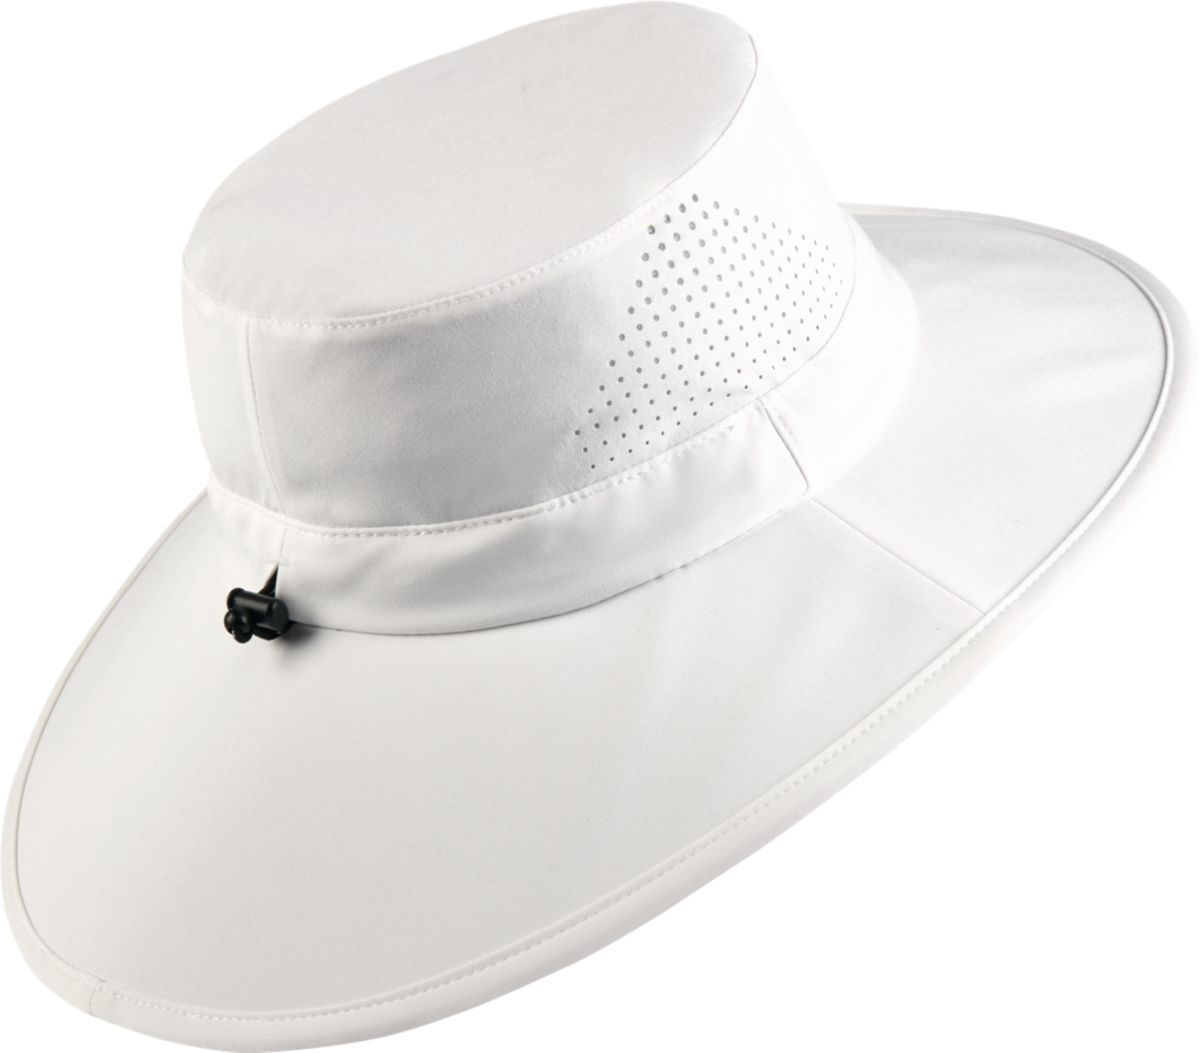 Nike Golf Dri-Fit Uv Bucket Hat Black/White